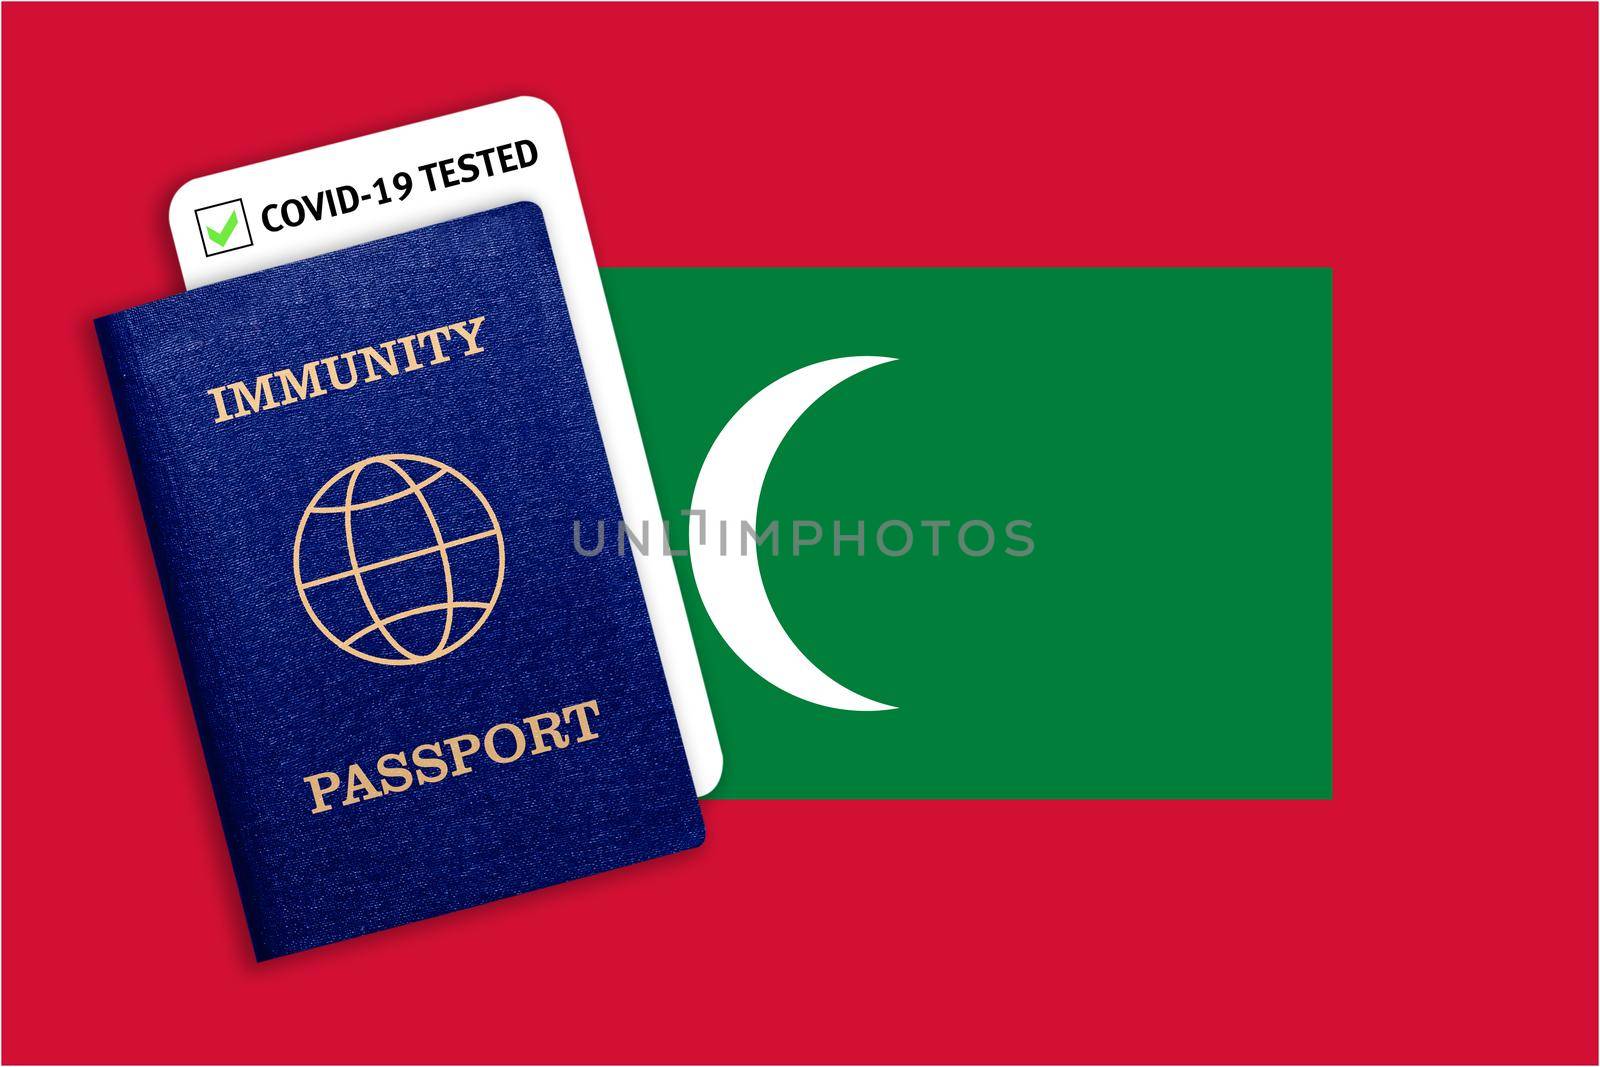 Immunity passport and test result for COVID-19 on flag of Maldives by galinasharapova